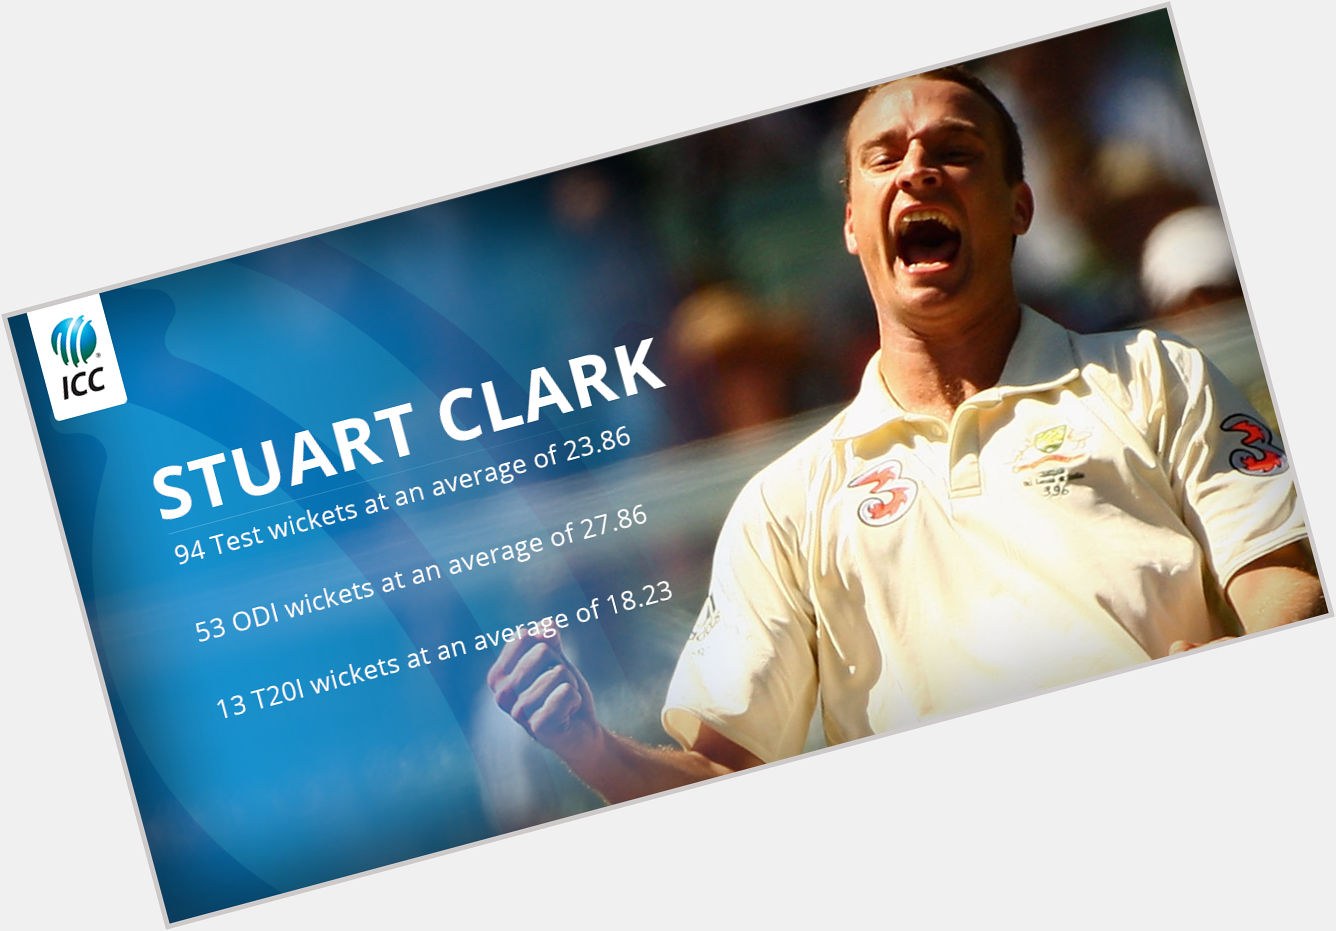 Happy Birthday to 2007 Cricket WorldCup winner
\"Stuart Clark\" 